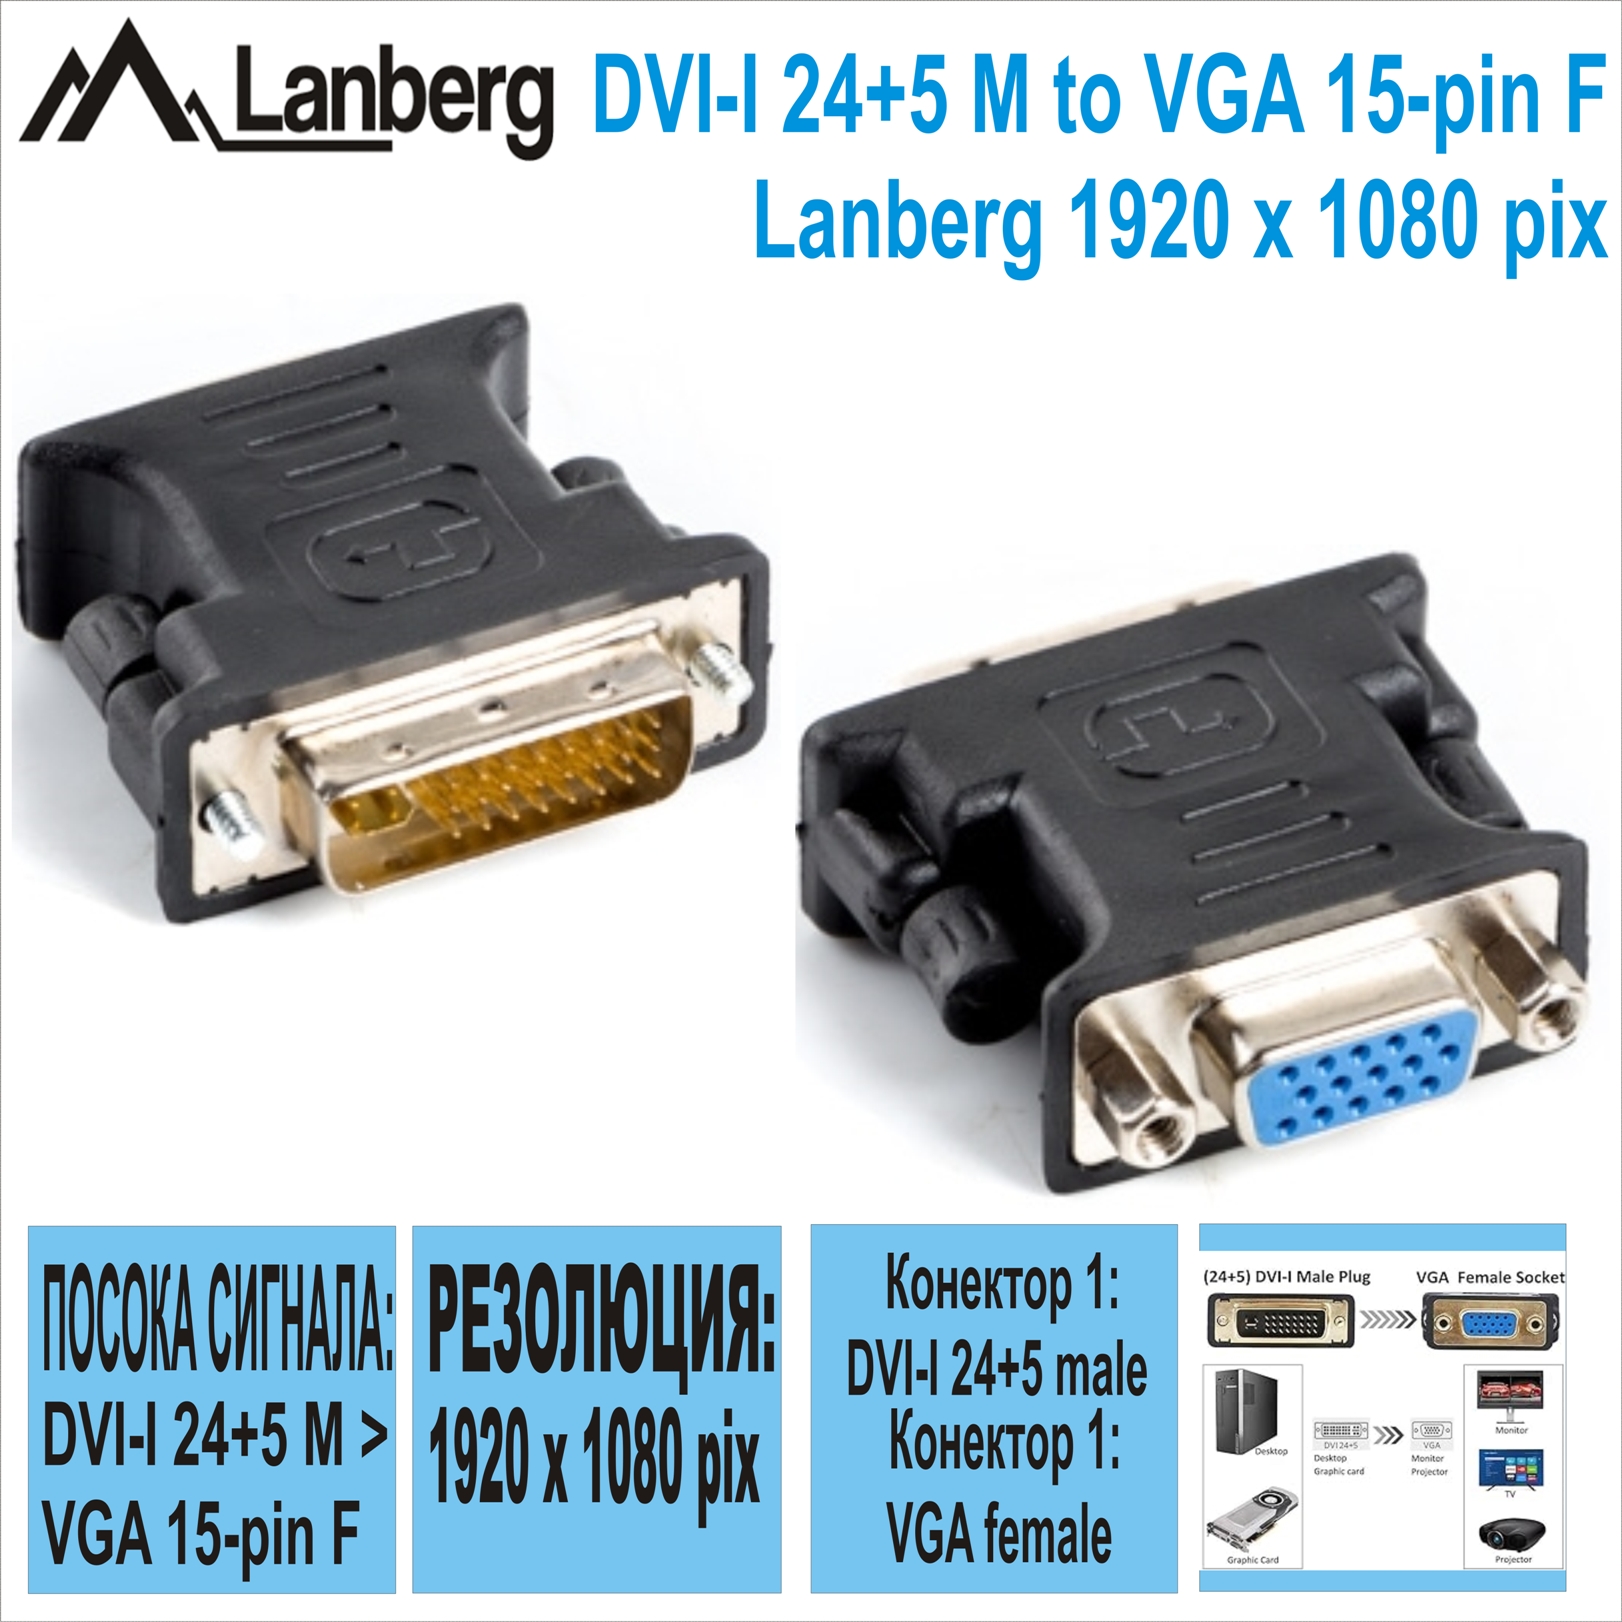 DVI-I 24+5 M to VGA 15-pin F Lanberg